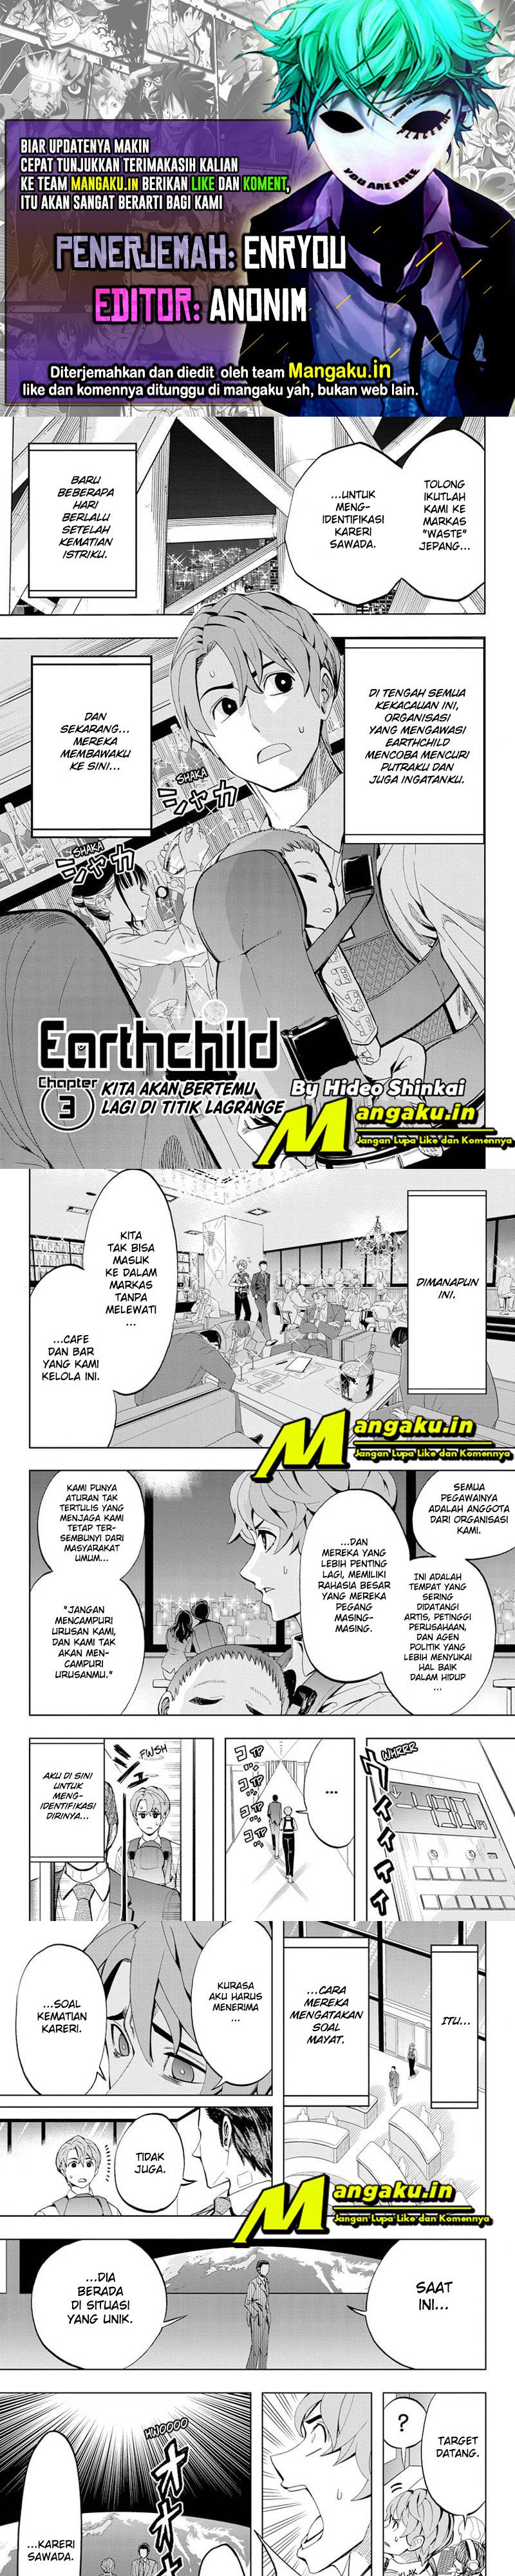 Earthchild Chapter 3